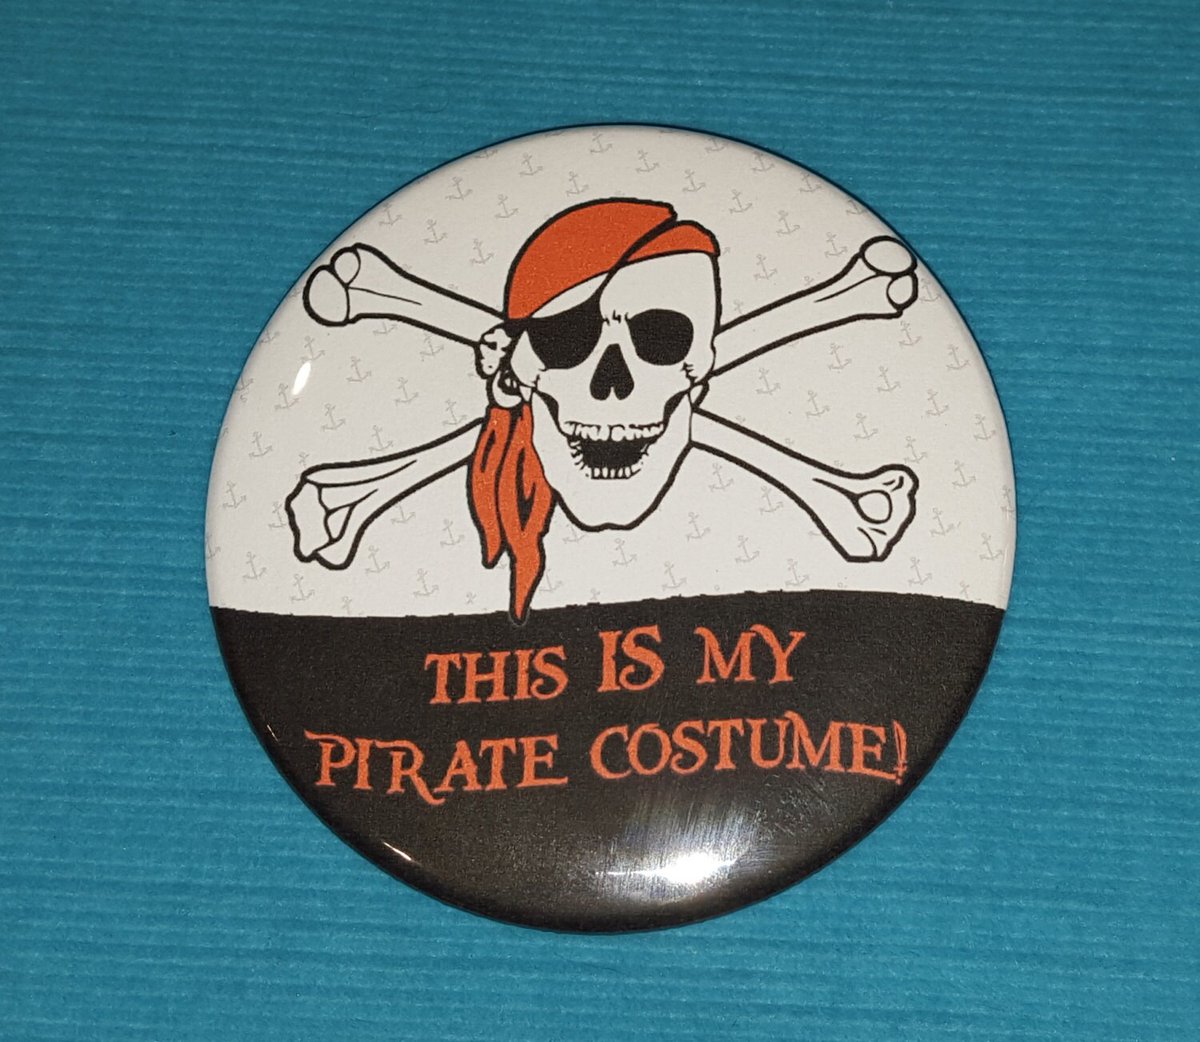 Disney Cruise Pirate Night - 'This IS my Pirate Costume!' - Celebration Button - Celebration Pin - Skull & Crossbones #DisneyPin #DisneyButton 
$3.49
➤ etsy.com/listing/294367…